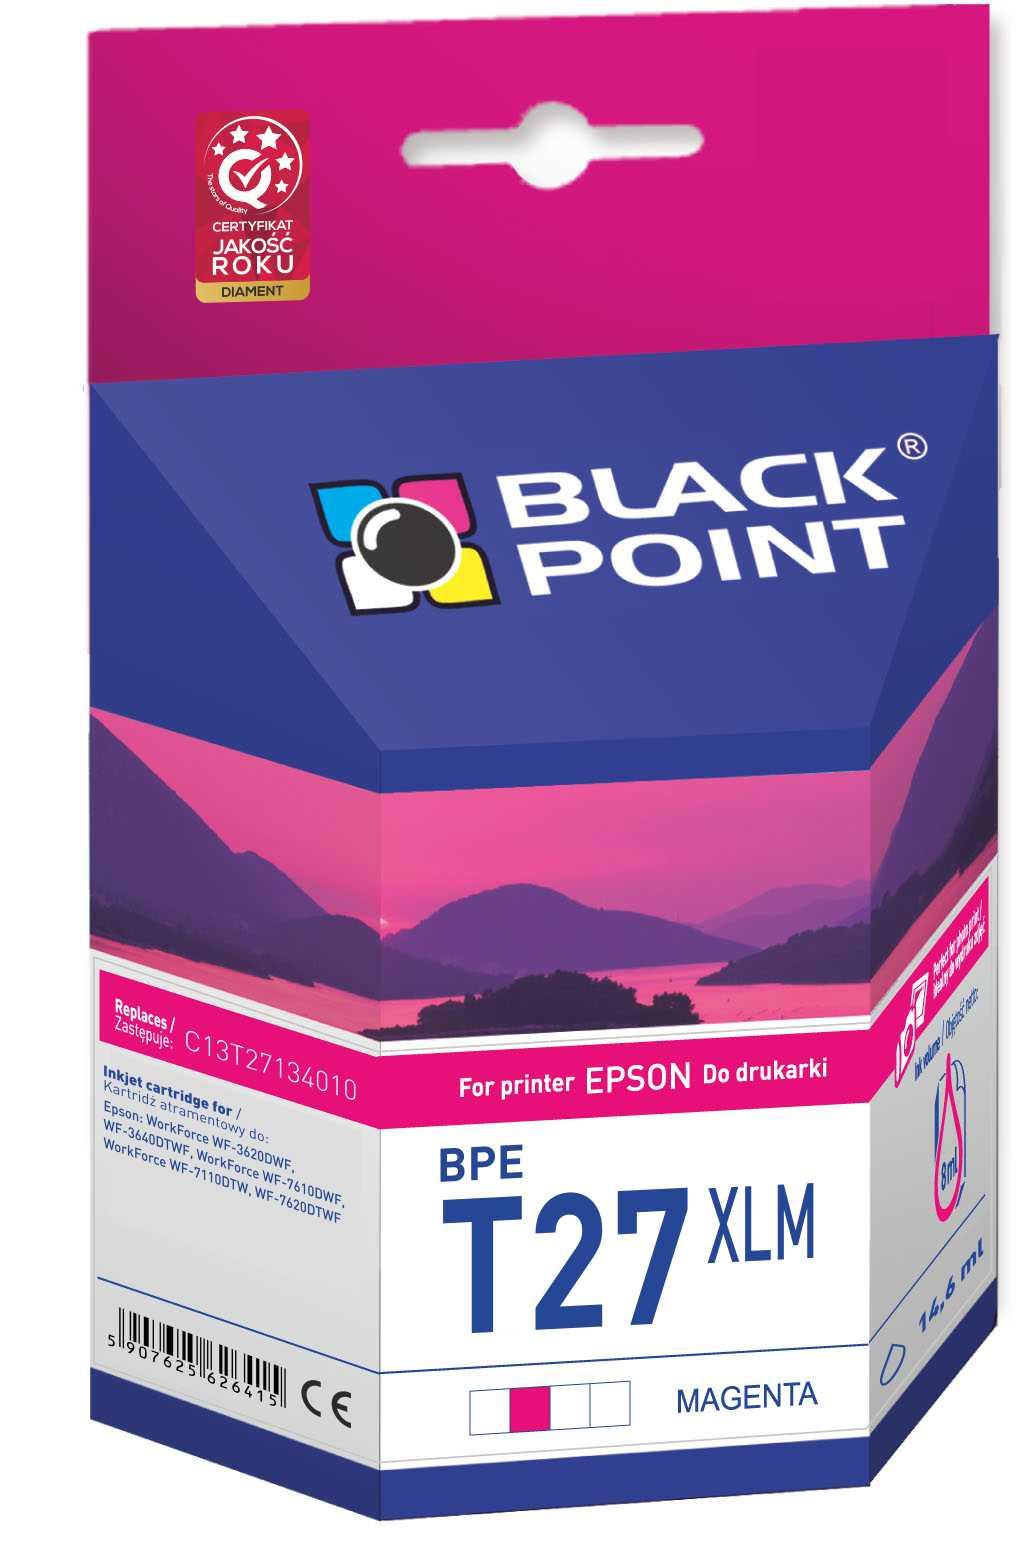 CMYK - Black Point tusz BPET27XLM zastpuje Epson C13T27134010, magenta
